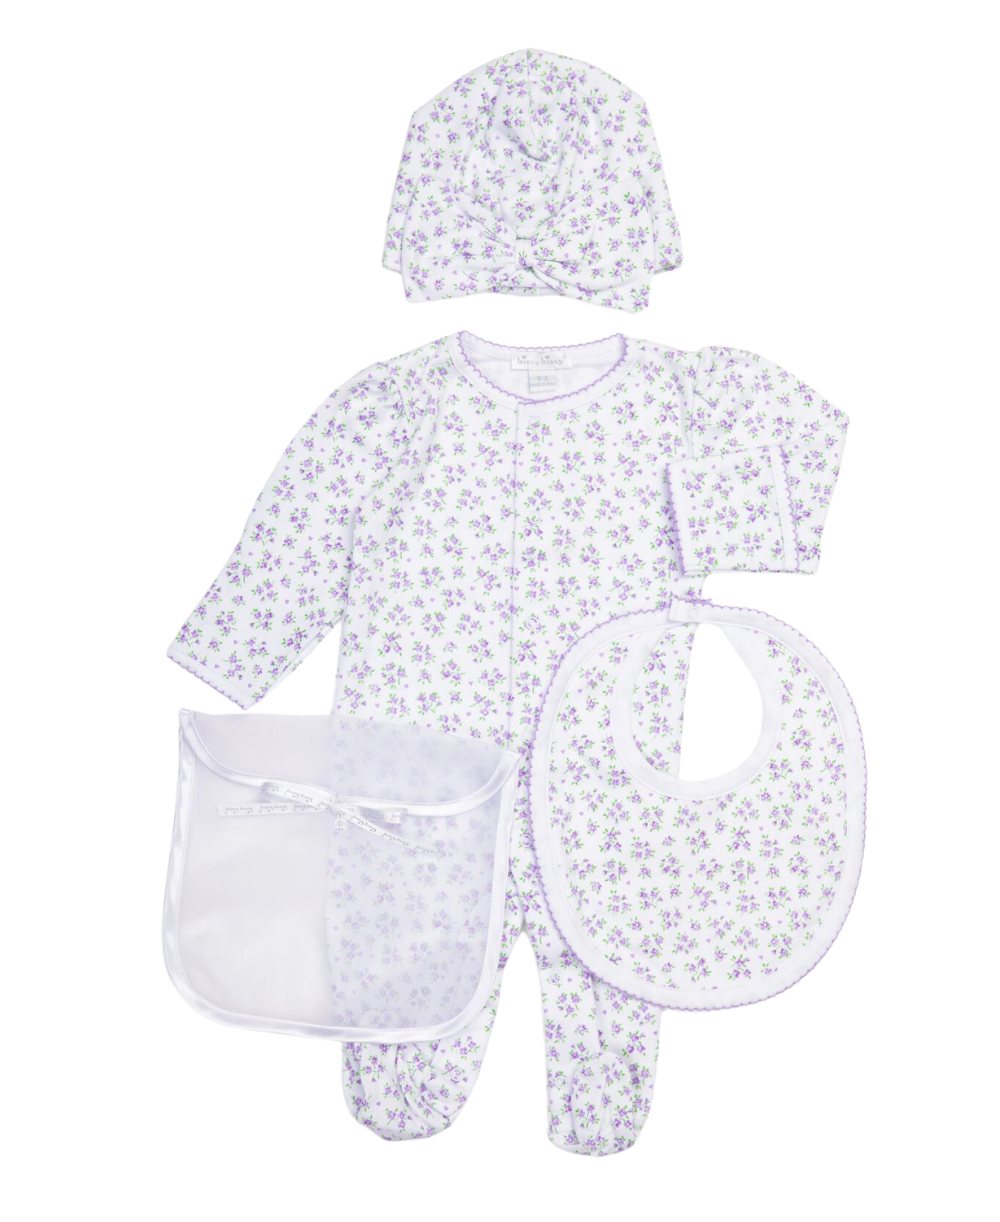 Petite Paradise Lilac 3PC Gift Set w/ Tulle Bag - Kissy Kissy